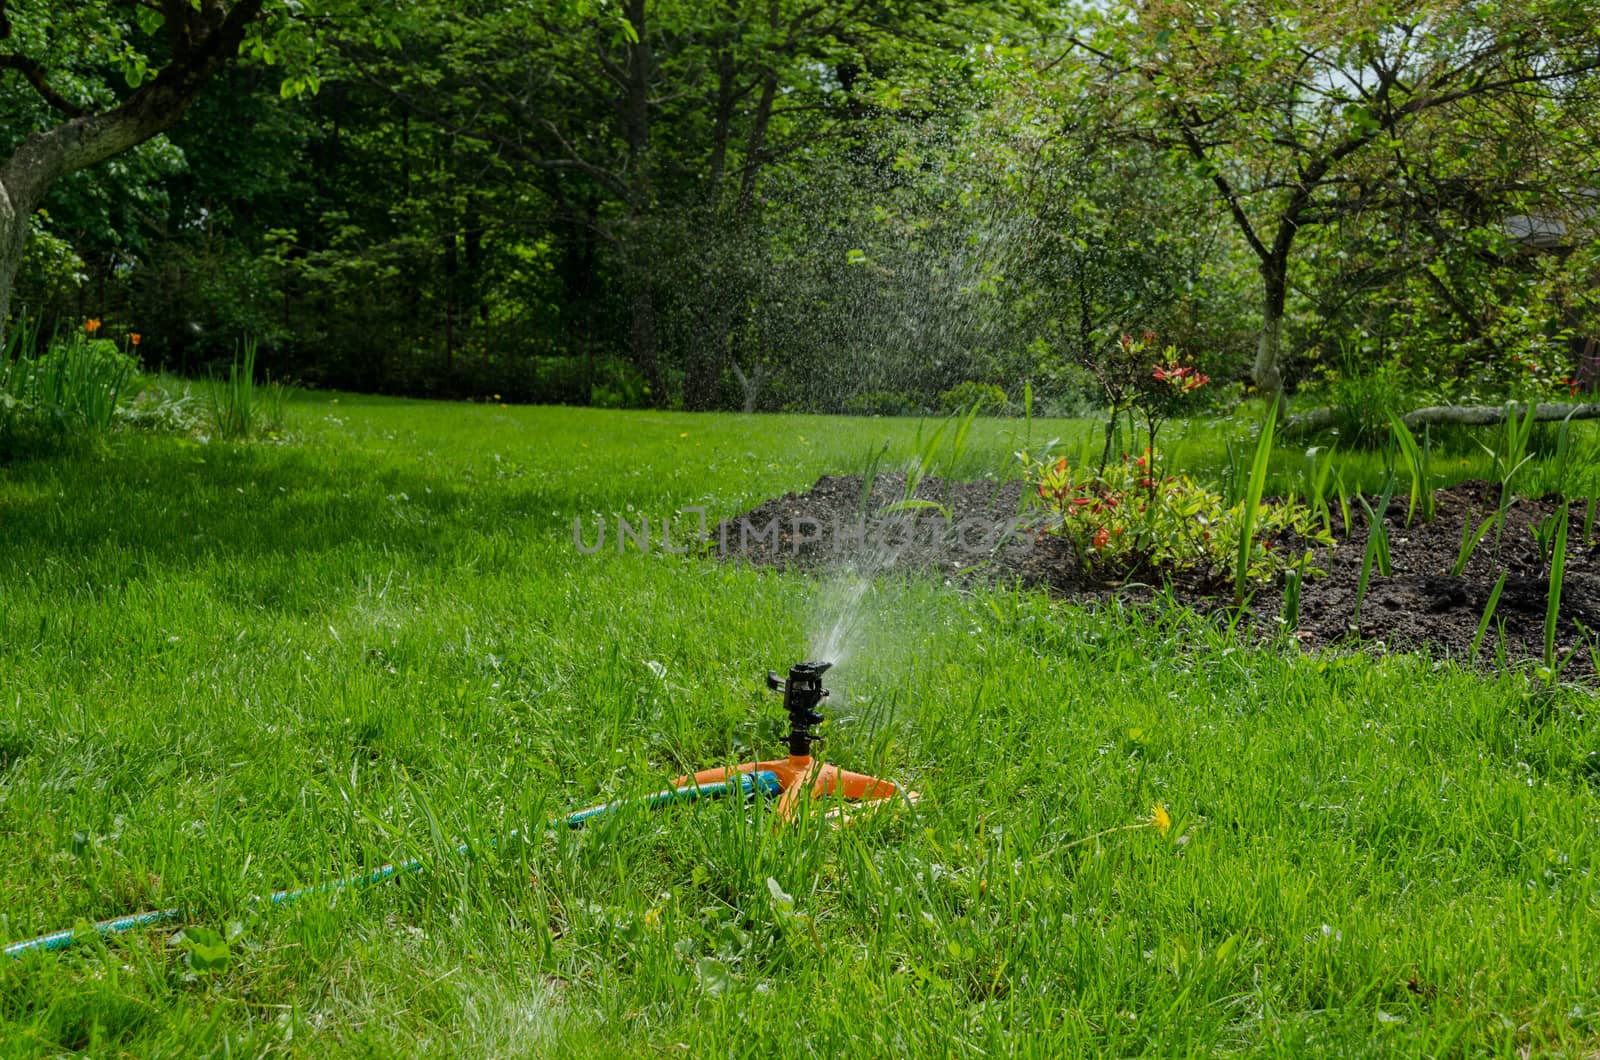 sprinkling irrigation on the grass garden